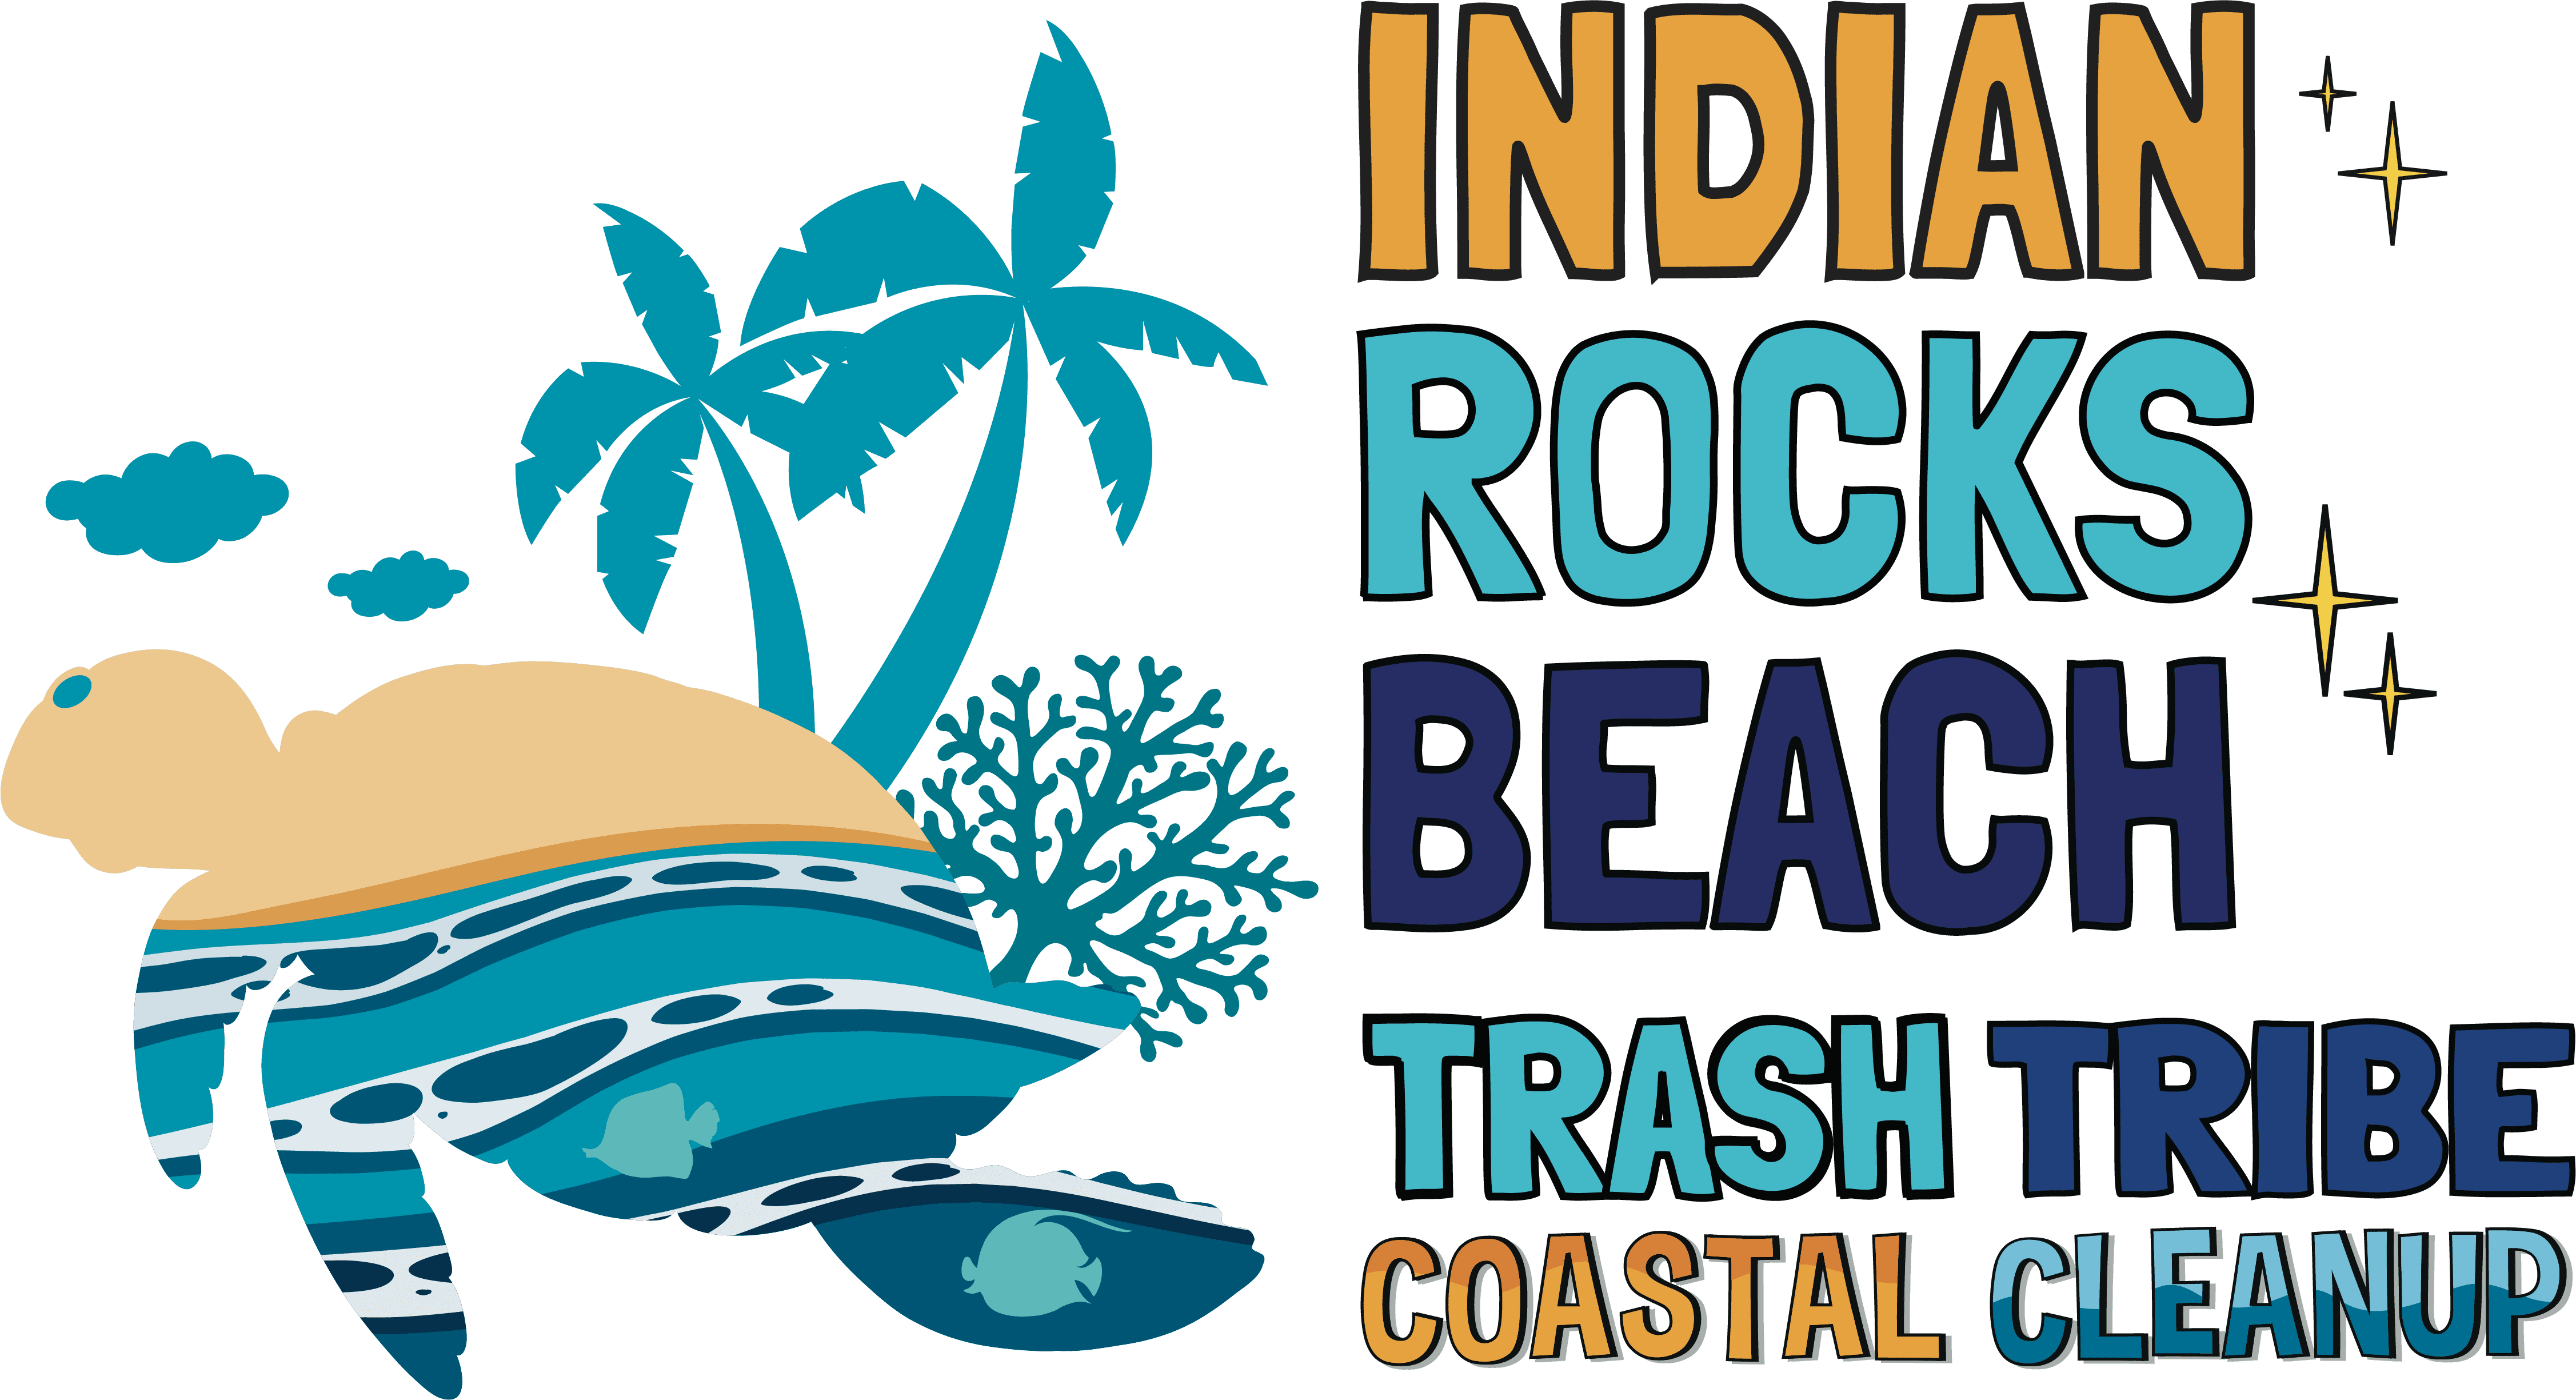 irb trash tribe coastal cleanup